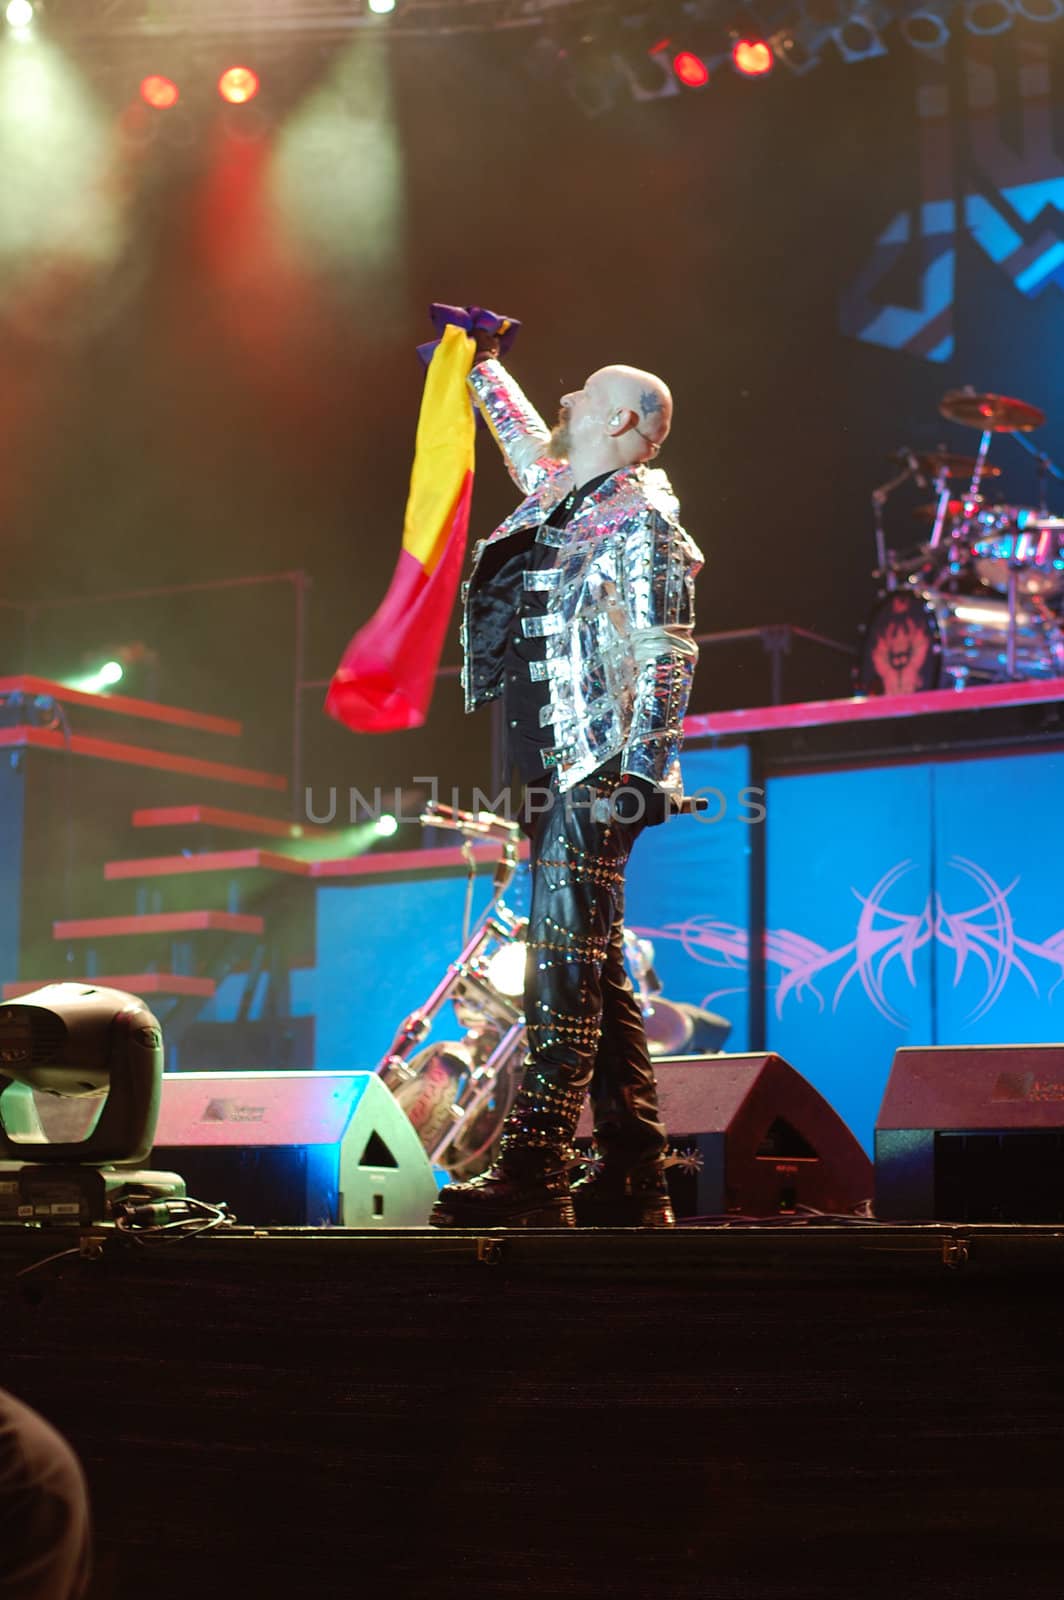 Judas Priest in Concert by marimar8989